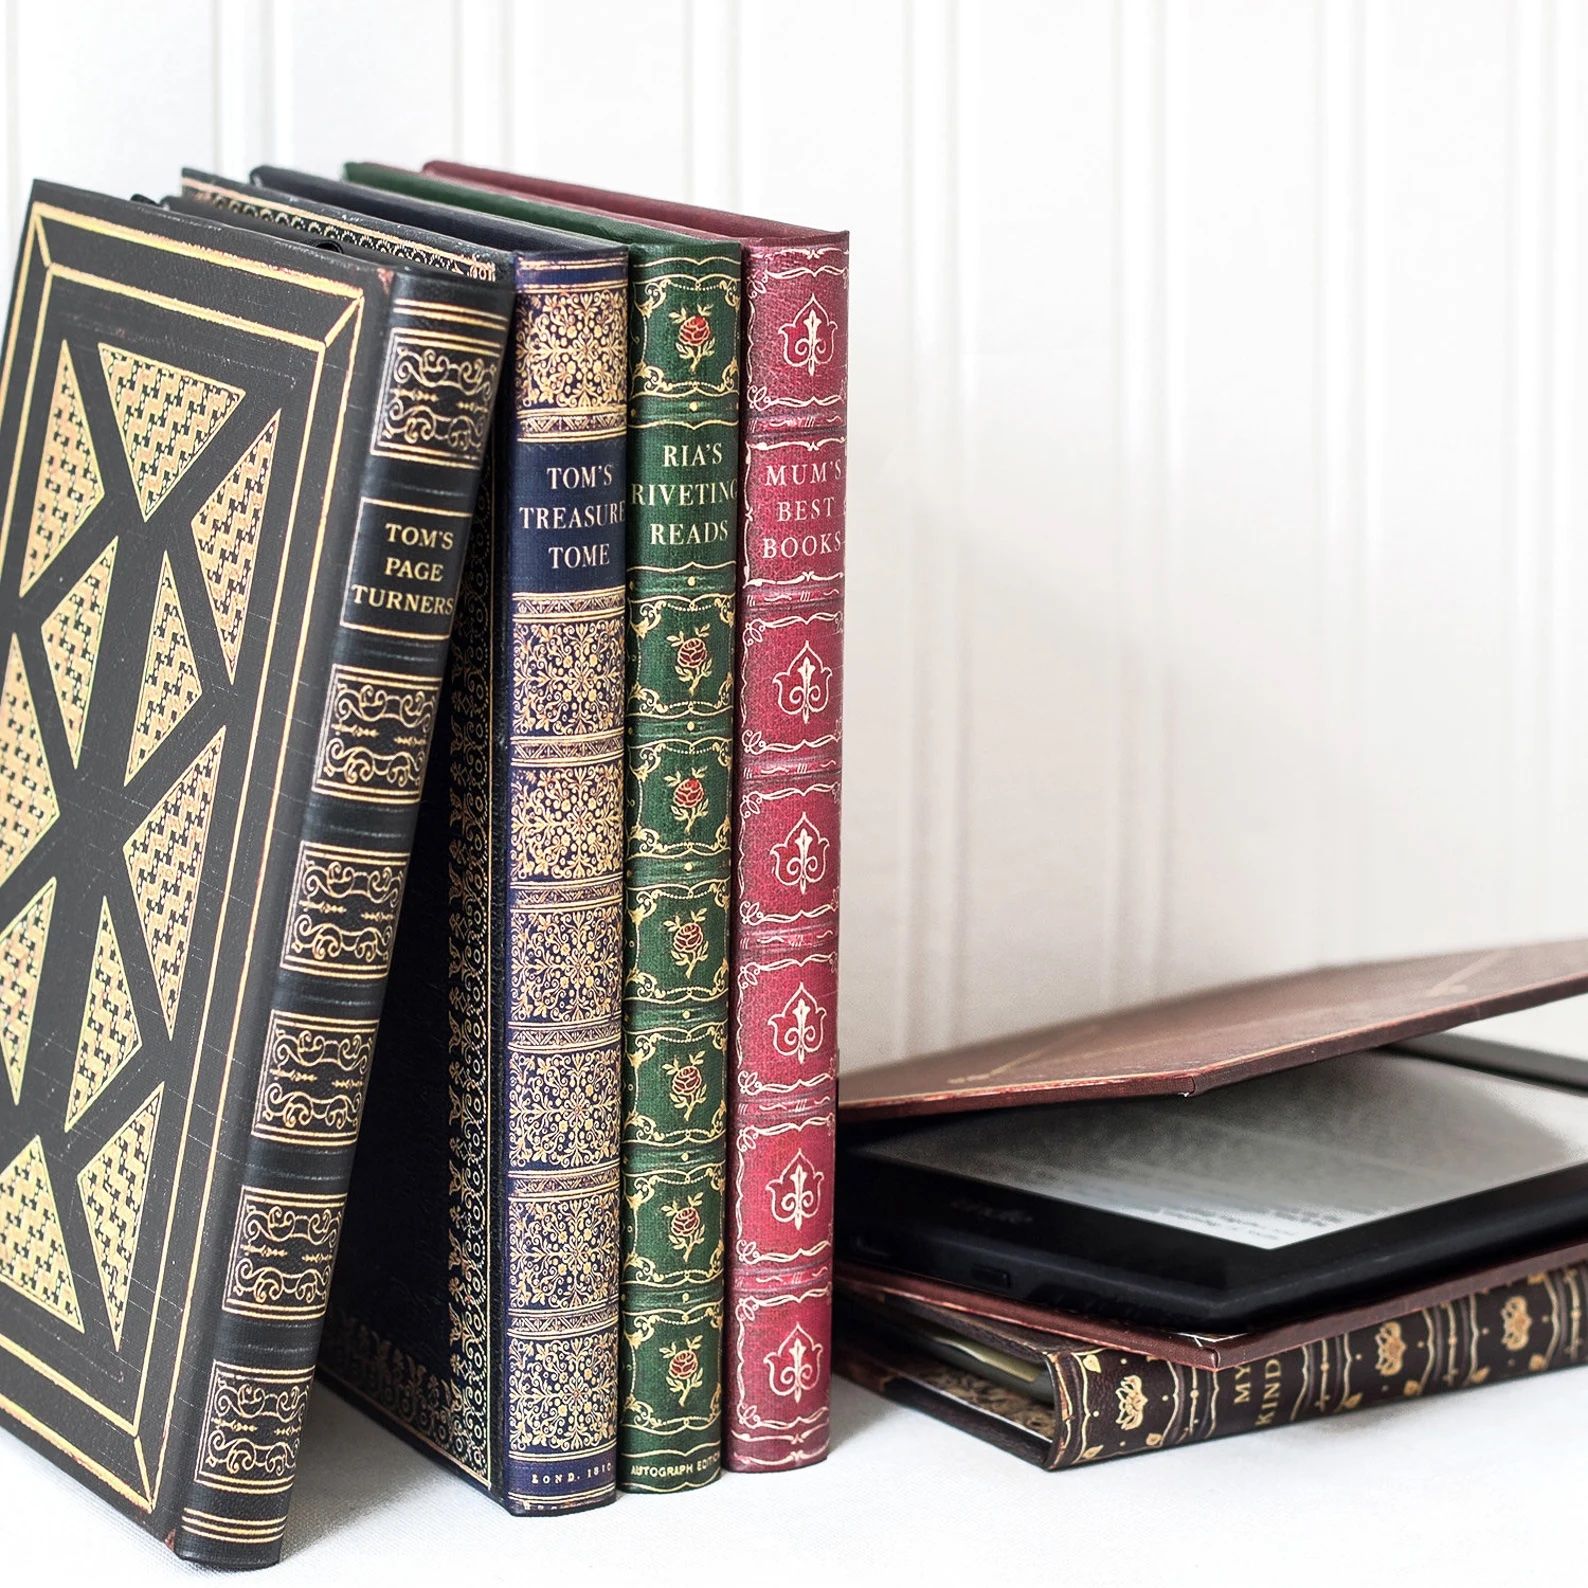 Kindle cases fashioned like real books on shelf